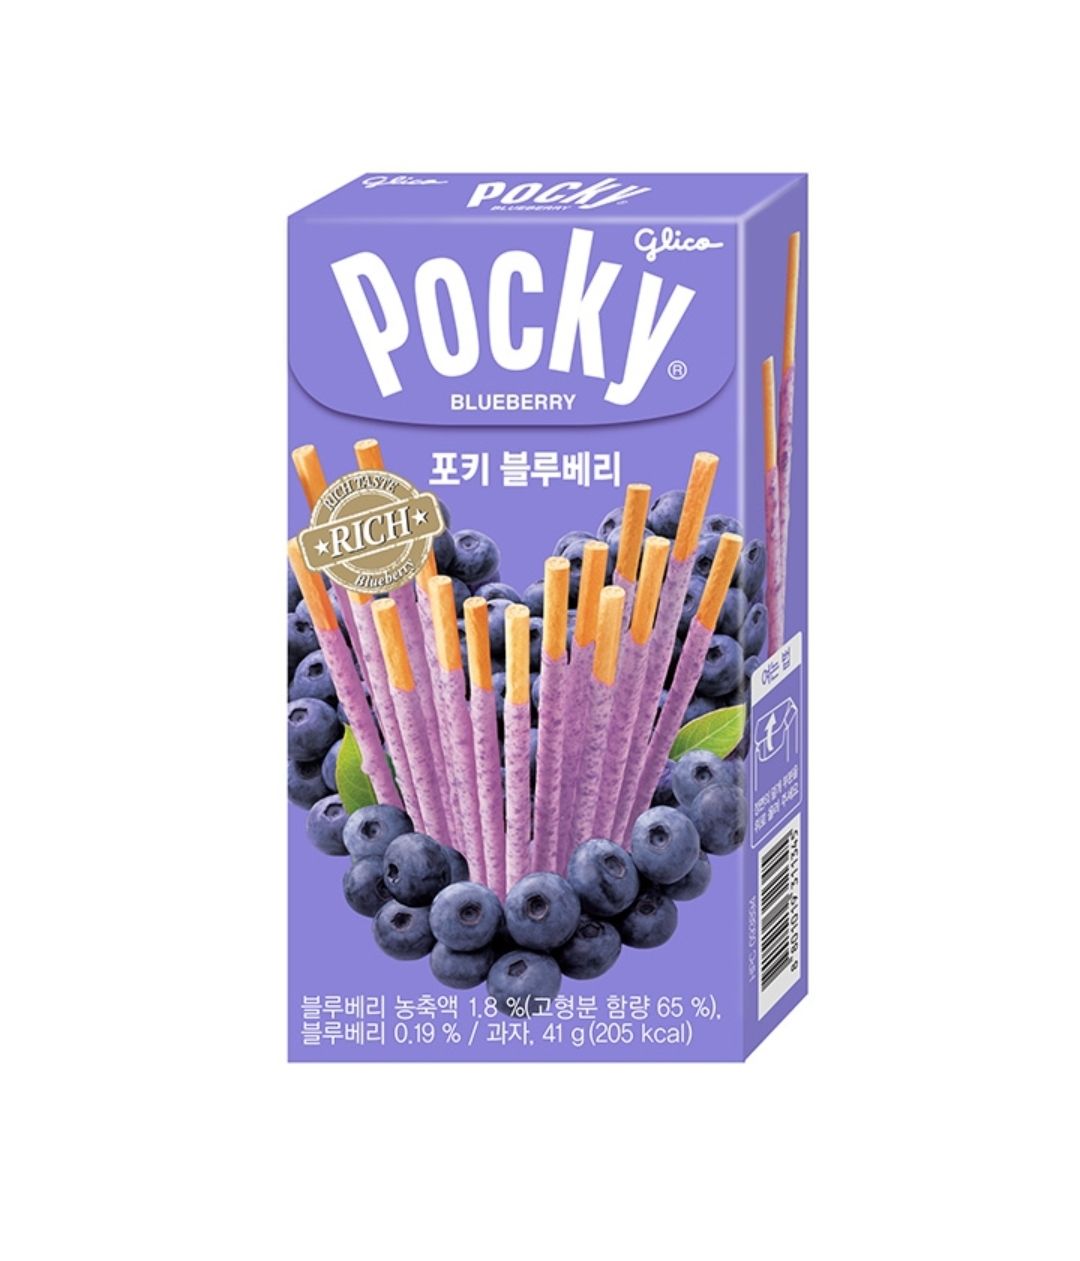 Pocky - Rich Blueberry Flavour